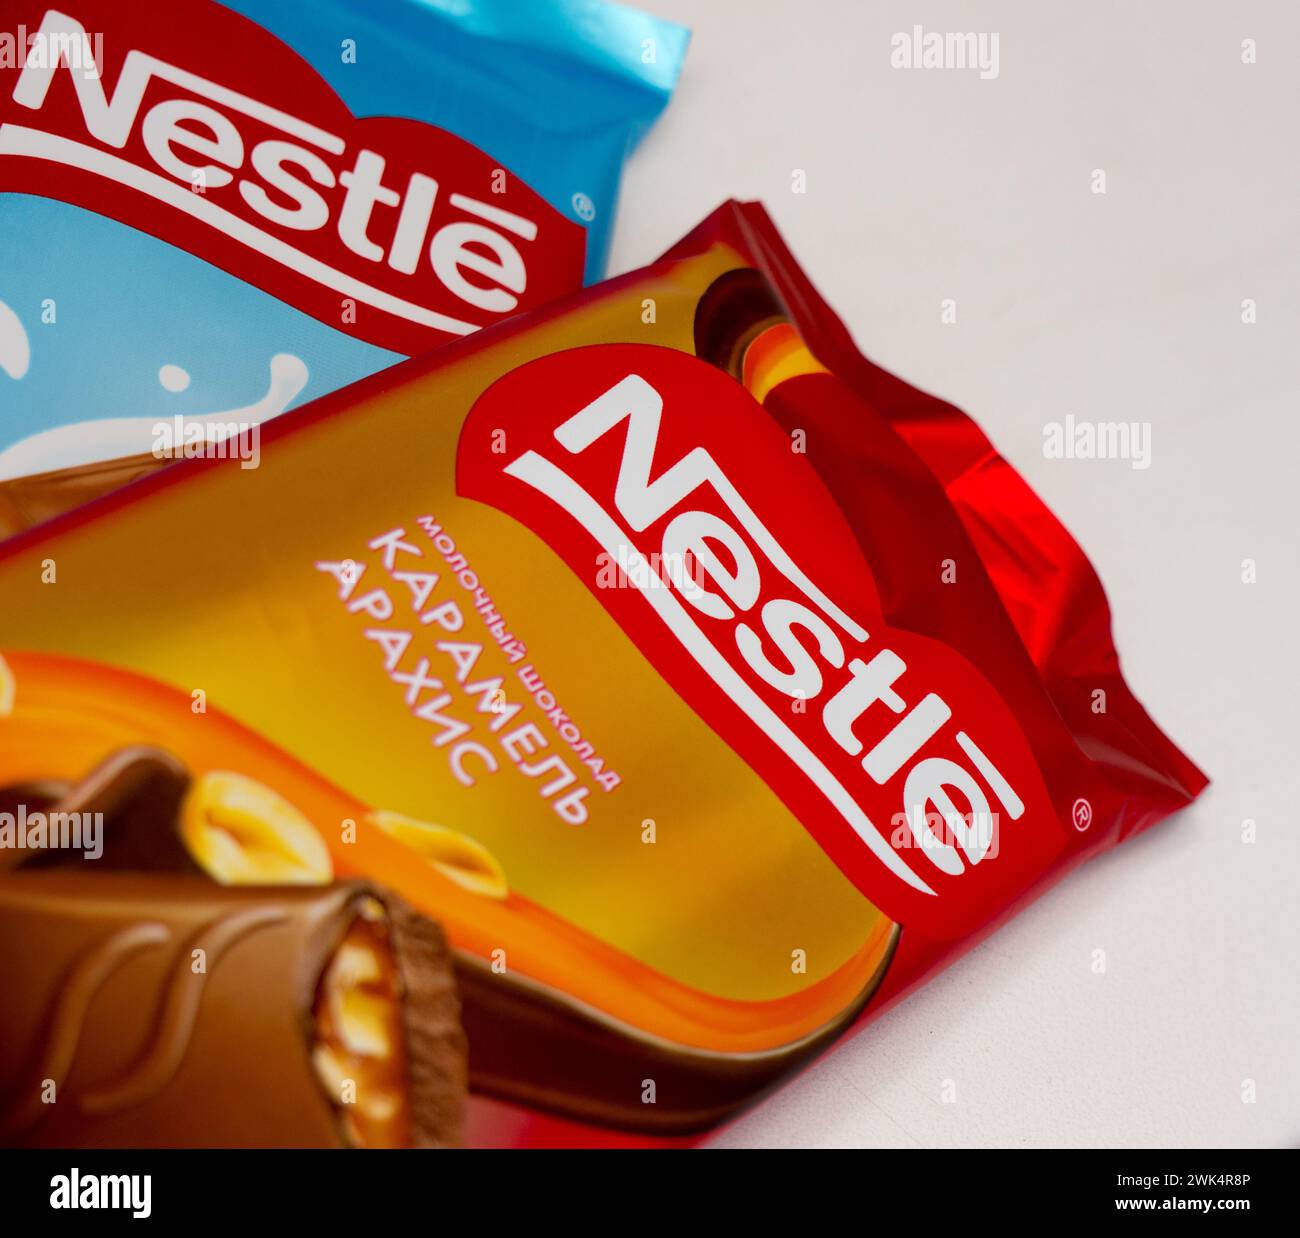 Nestle chocolate bar with hazelnuts. Stock Photo